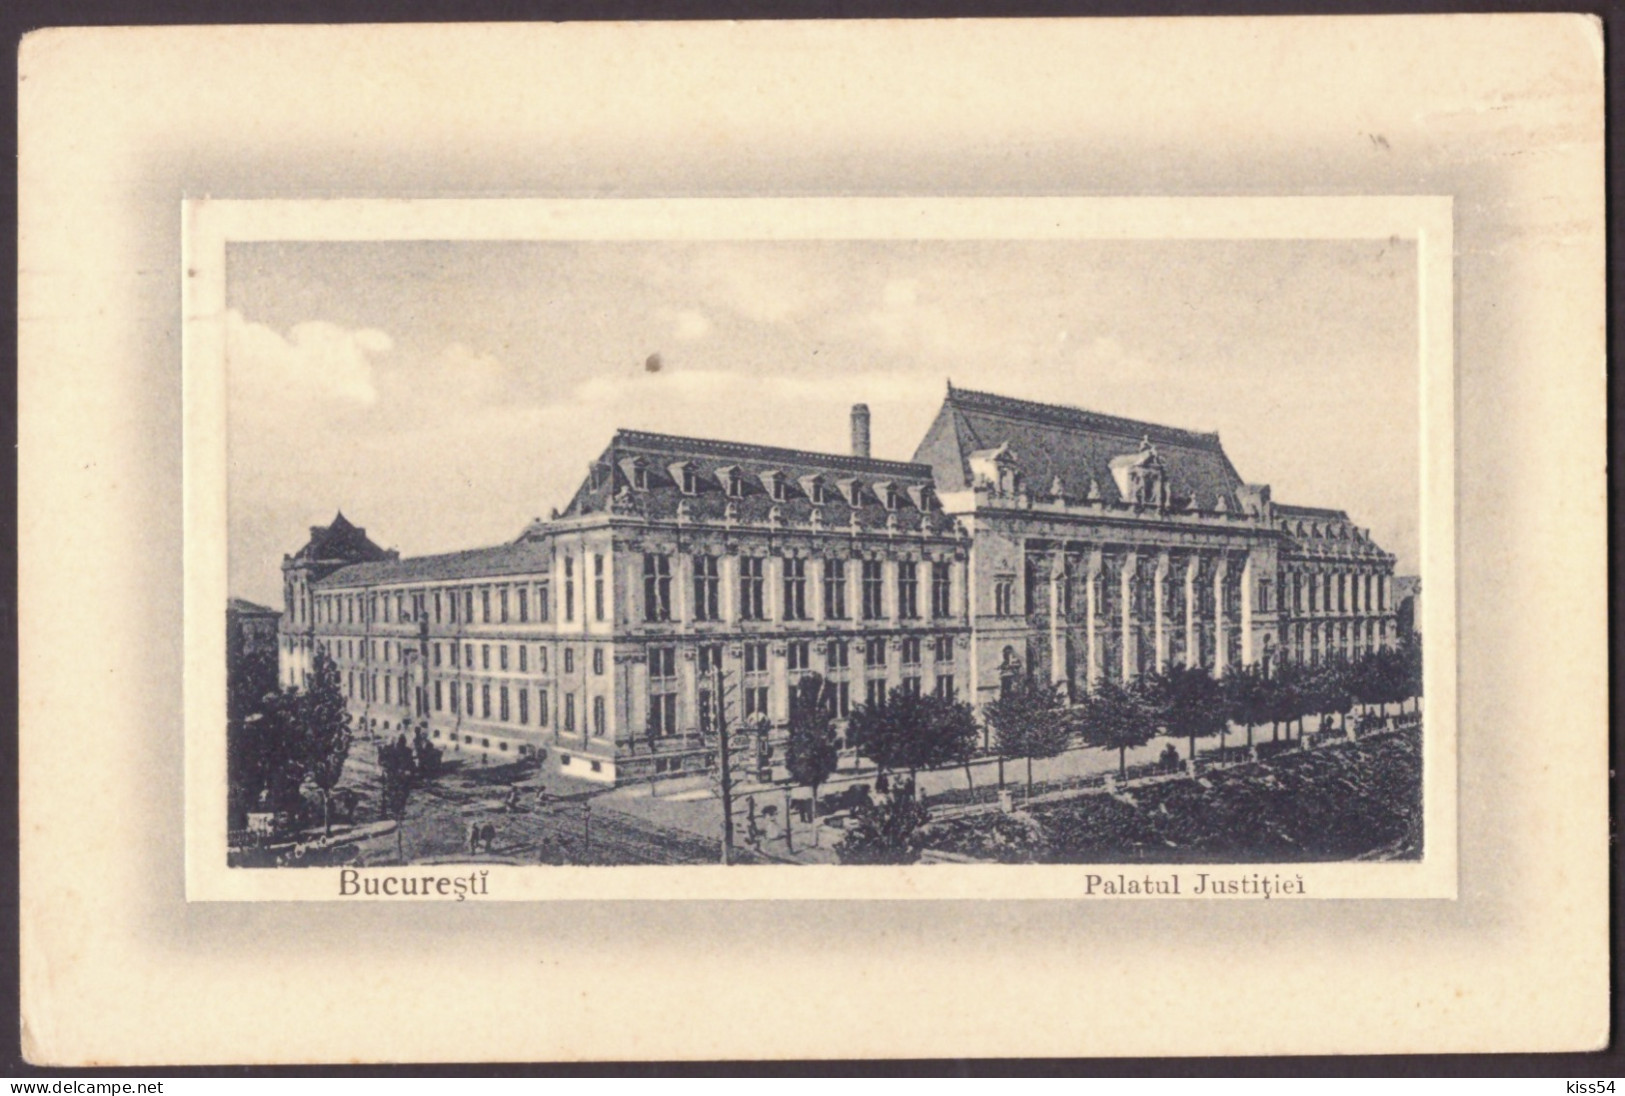 RO 74 - 24885 BUCURESTI, Justice Palace, Rama, Romania - Old Postcard, EMBOSSED - Used - 1910 - Rumänien